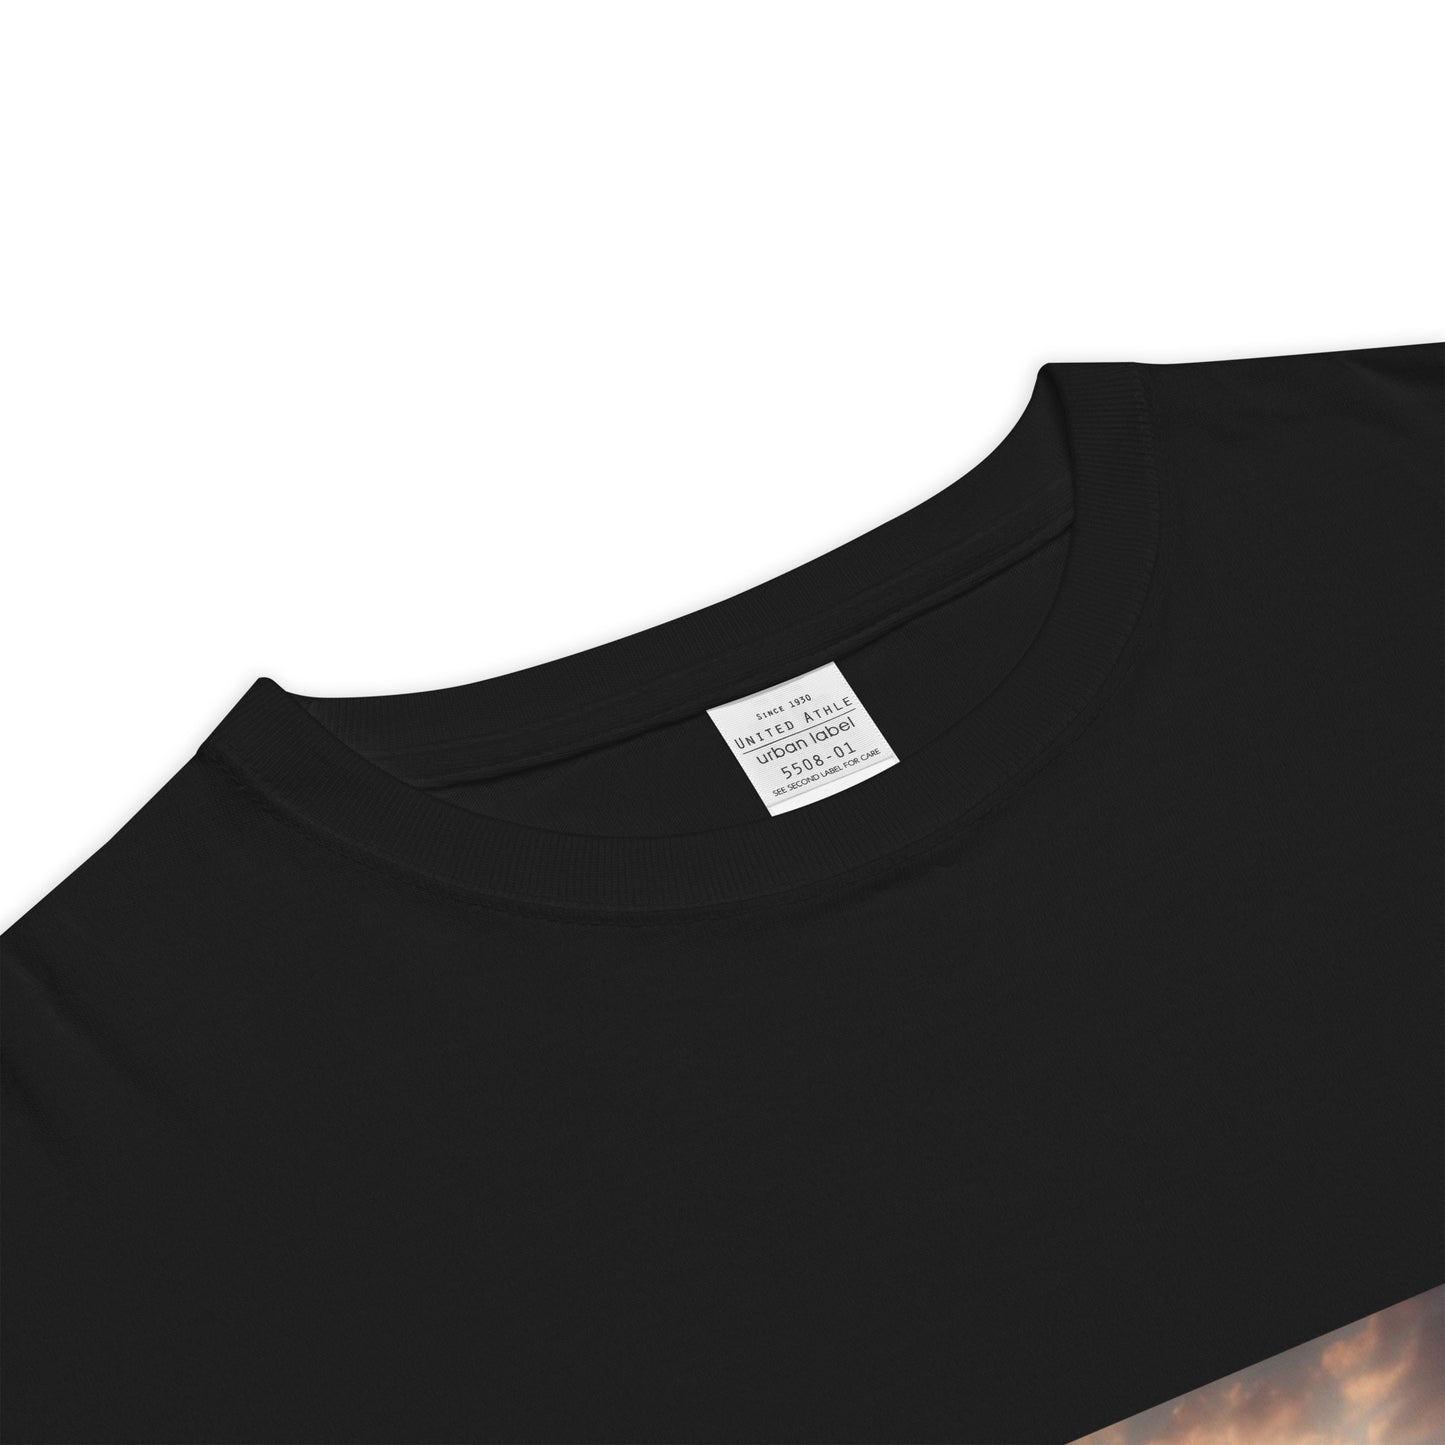 Safari Voyager Bear T-Shirt Black - ROSE Society